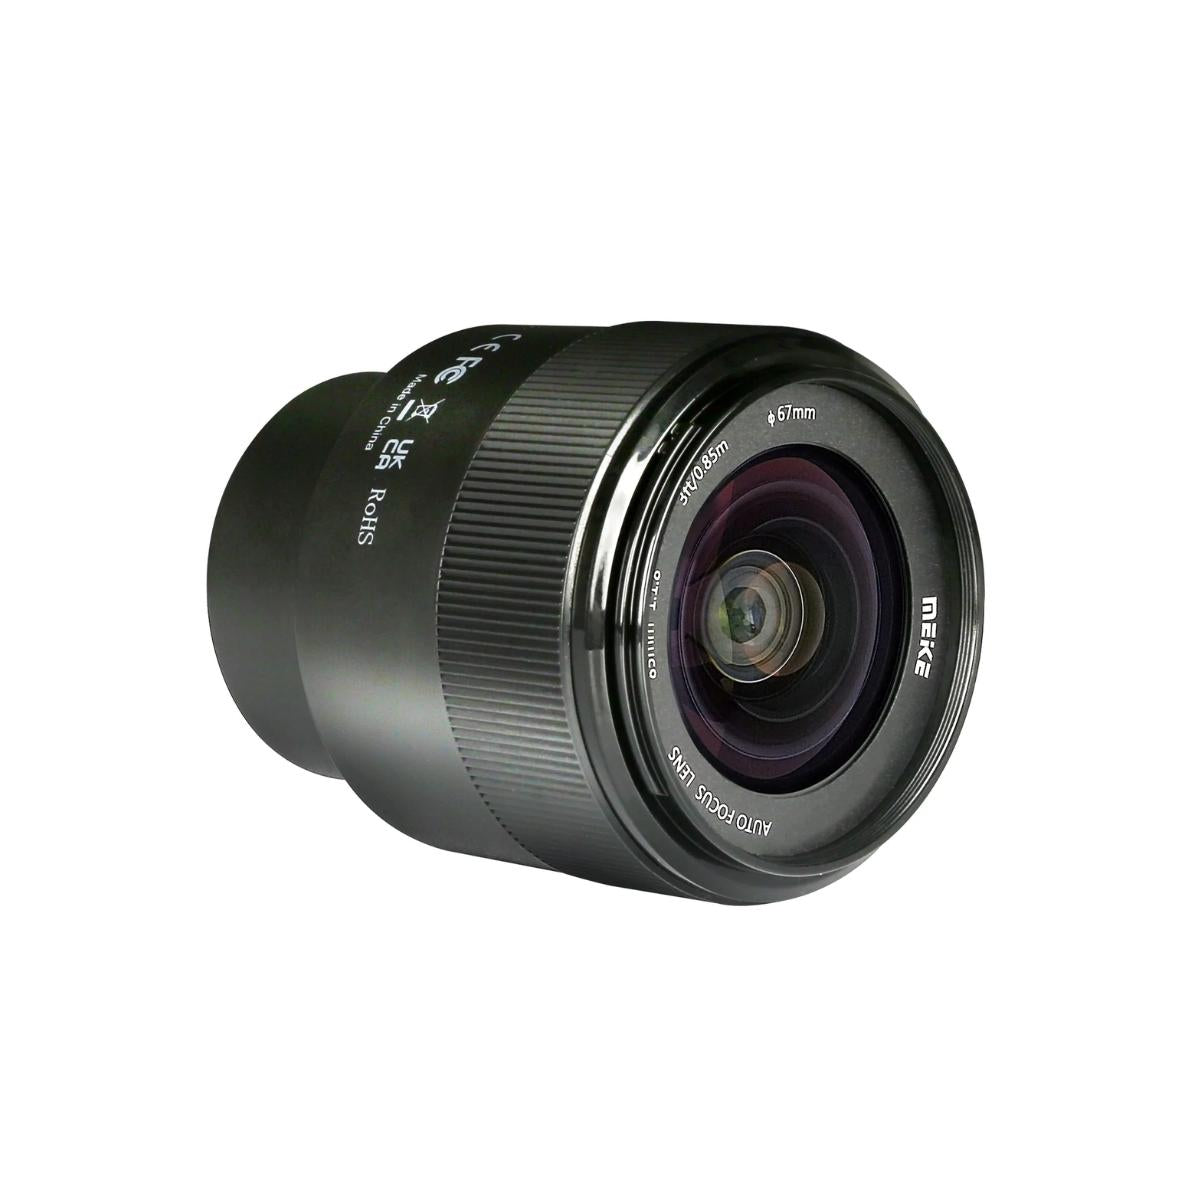 Meike 85mm f/1.8 STM Stepping Motor Auto Focus Full Frame Prime Medium Telephoto Lens for Sony E-Mount Mirrorless Cameras